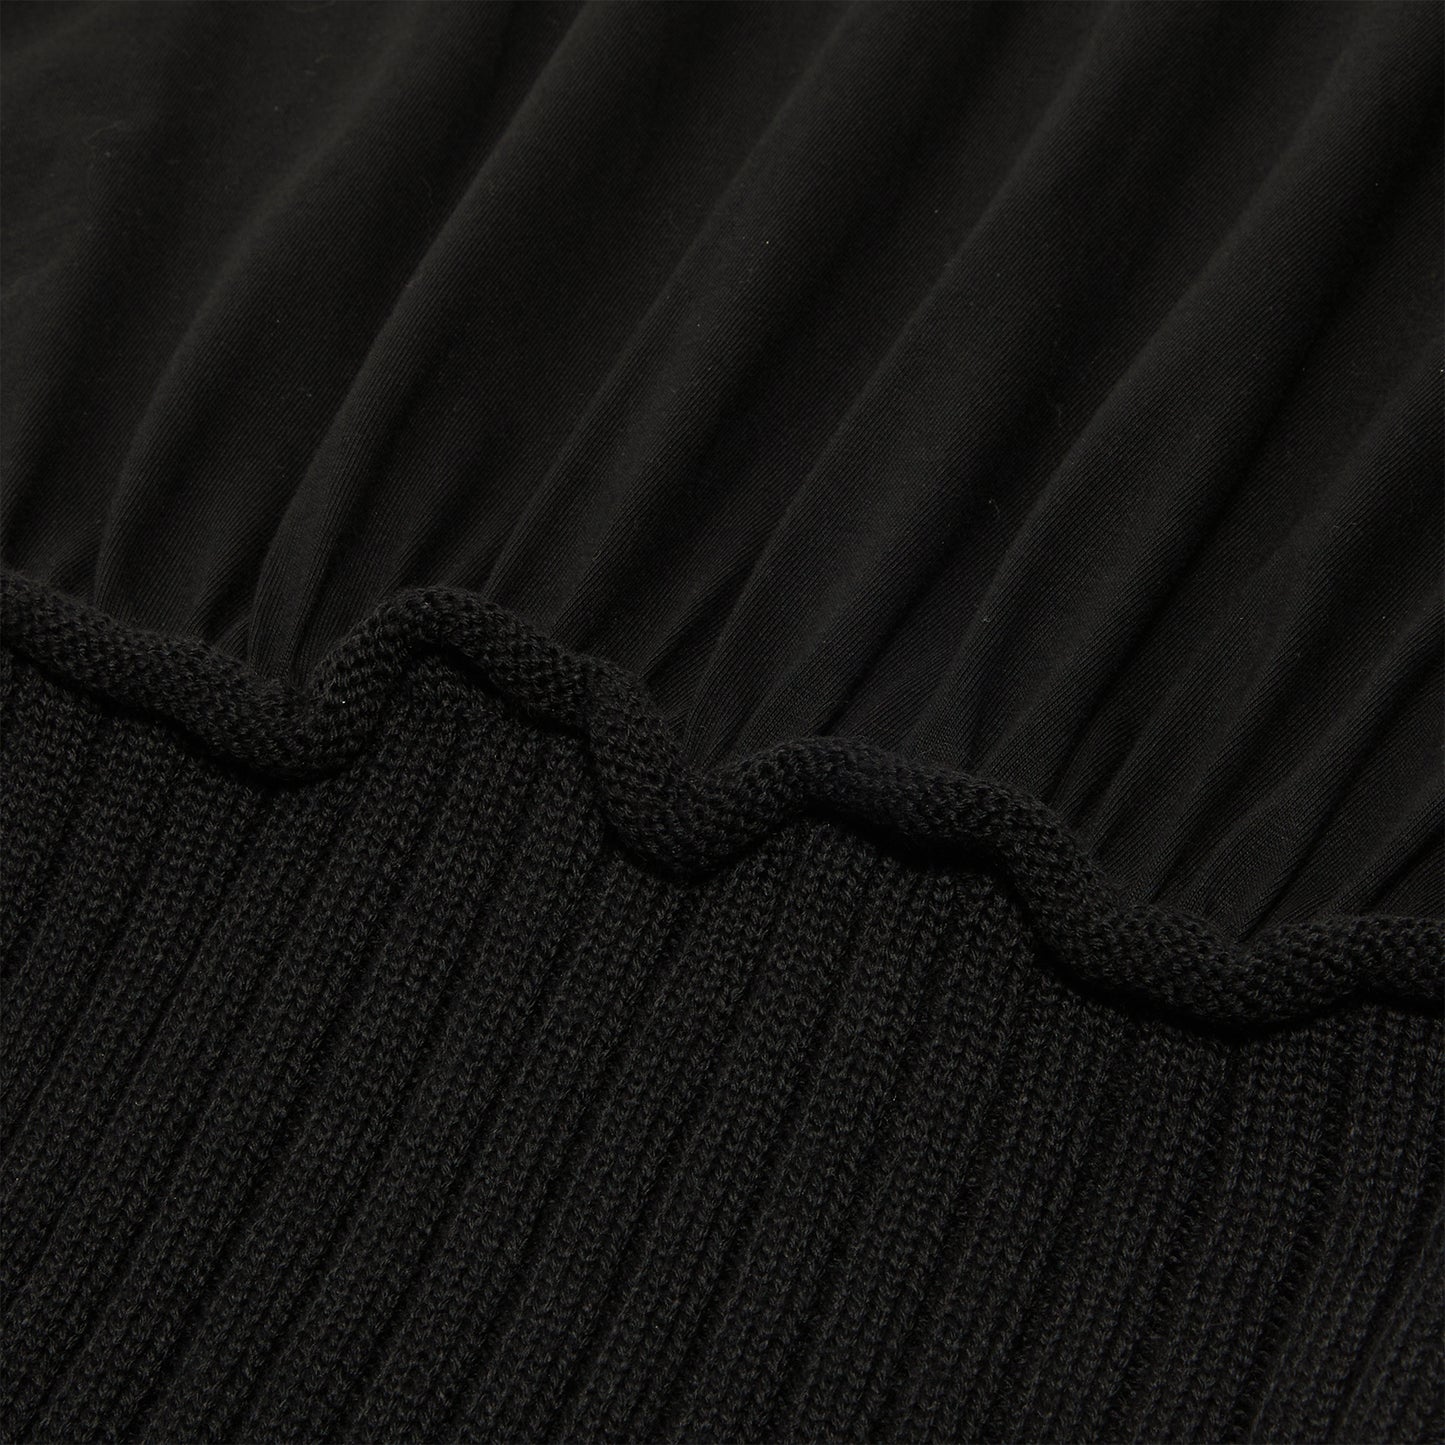 MM6 Maison Margiela Knitted Sweater (Black)